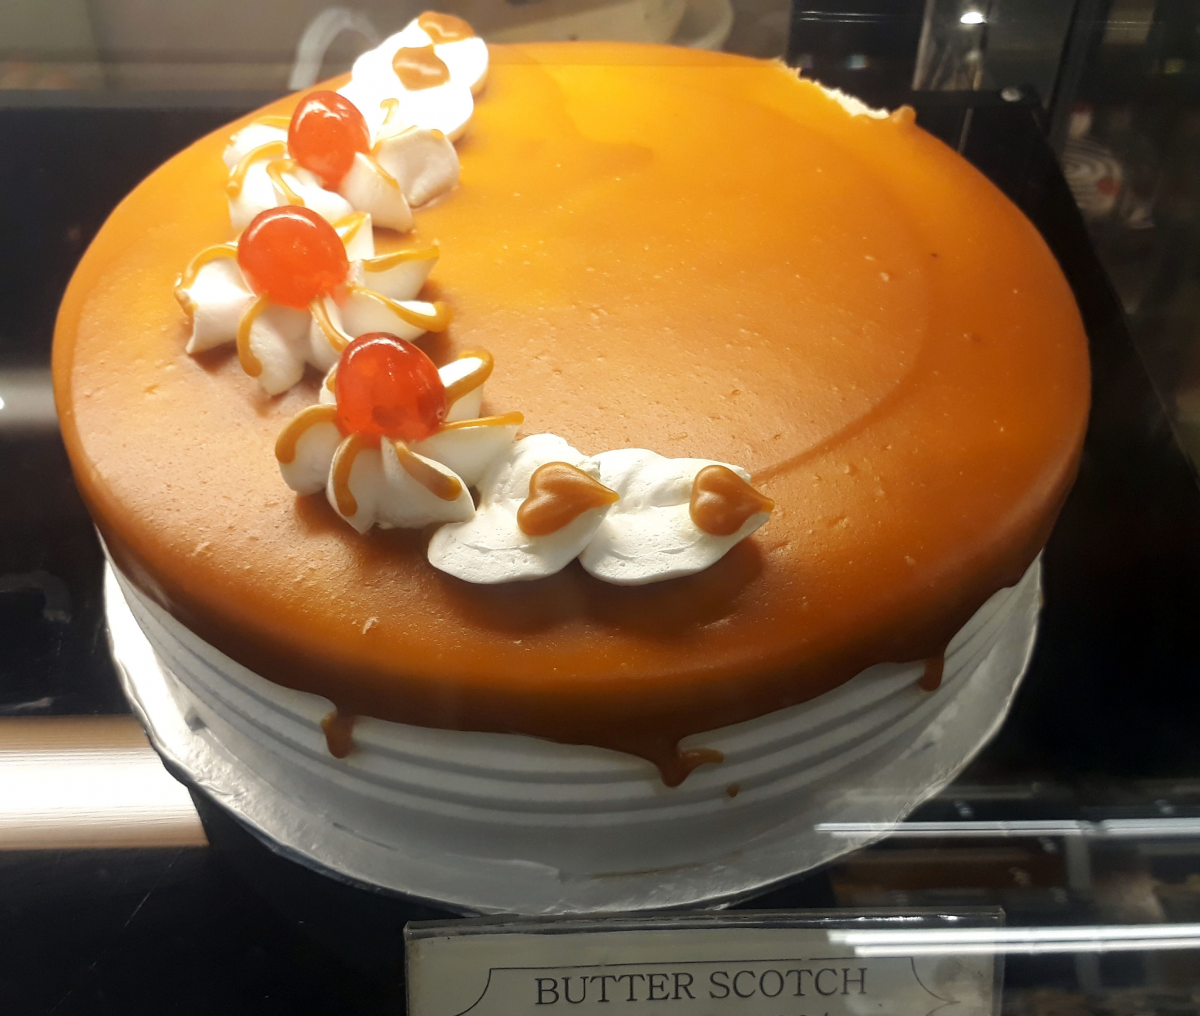 Butter Scotch Cake 2LBS - SendFlowers.pk